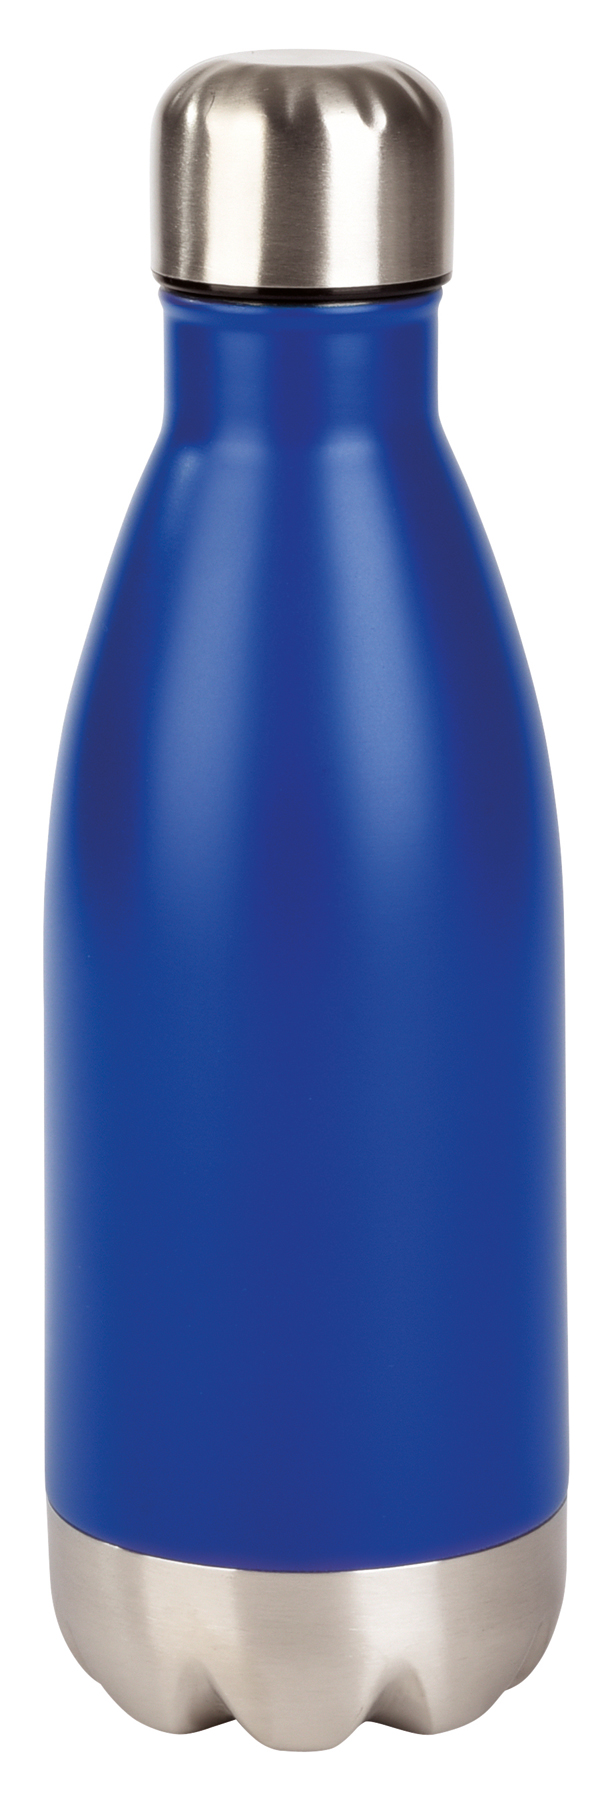 Trinkflasche PARKY - blau